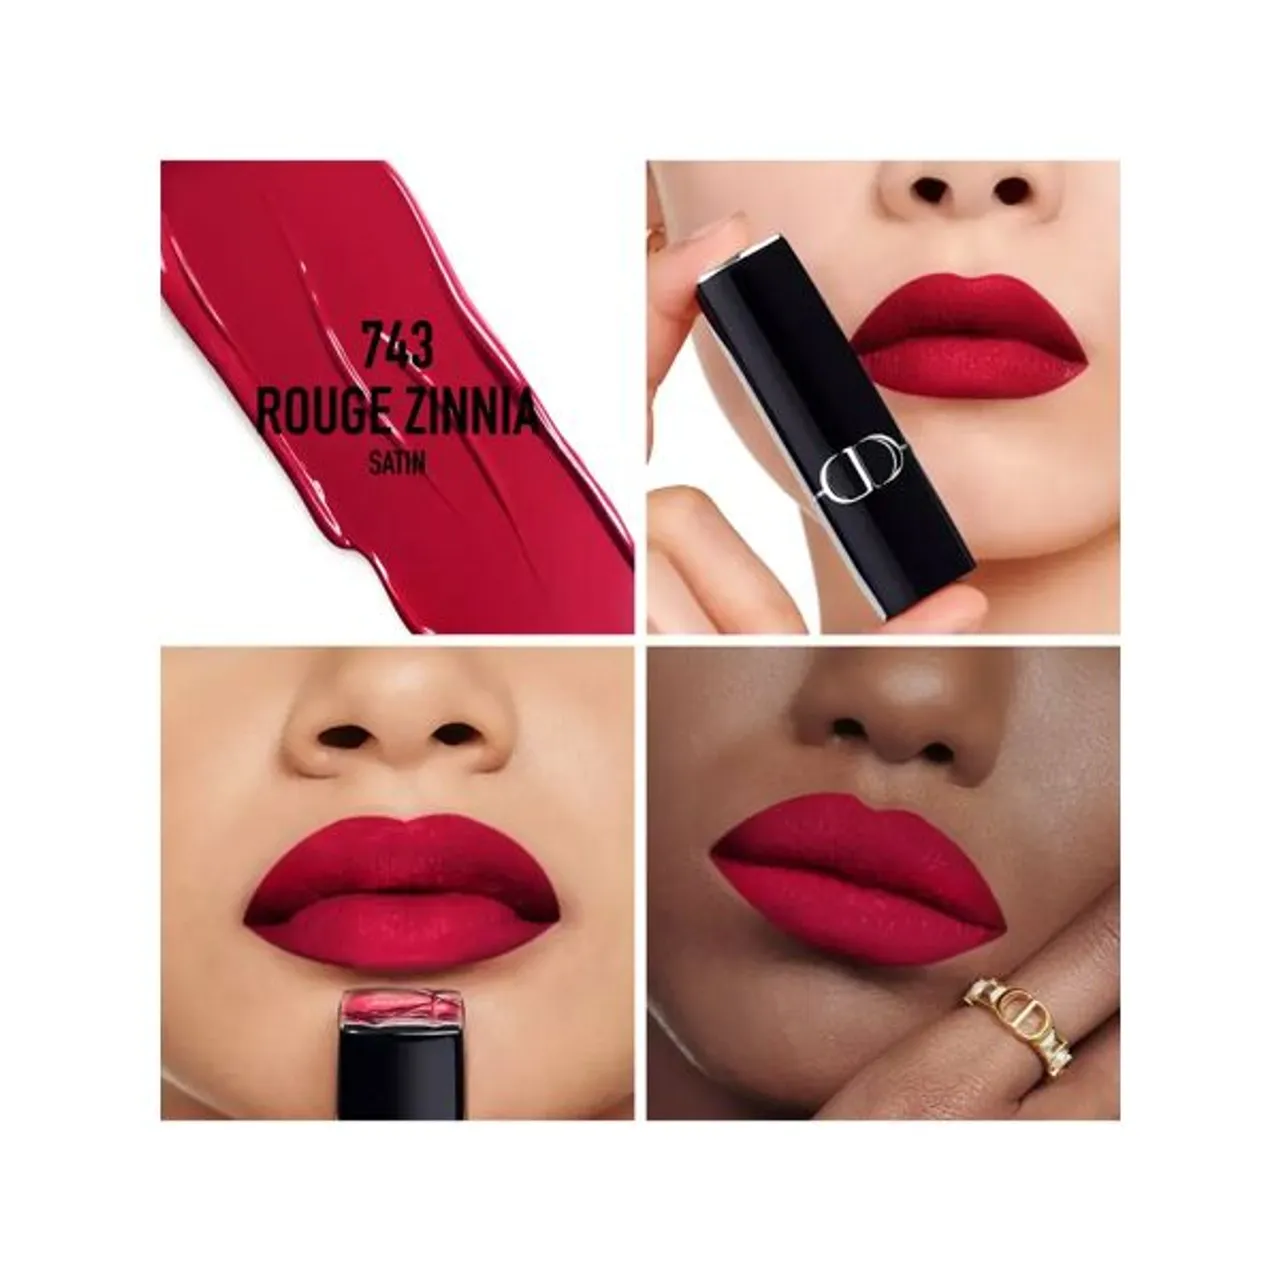 Christian Dior Rouge Dior Couture Colour Lipstick - Satin Finish - 743 Rouge Zinnia - Unisex